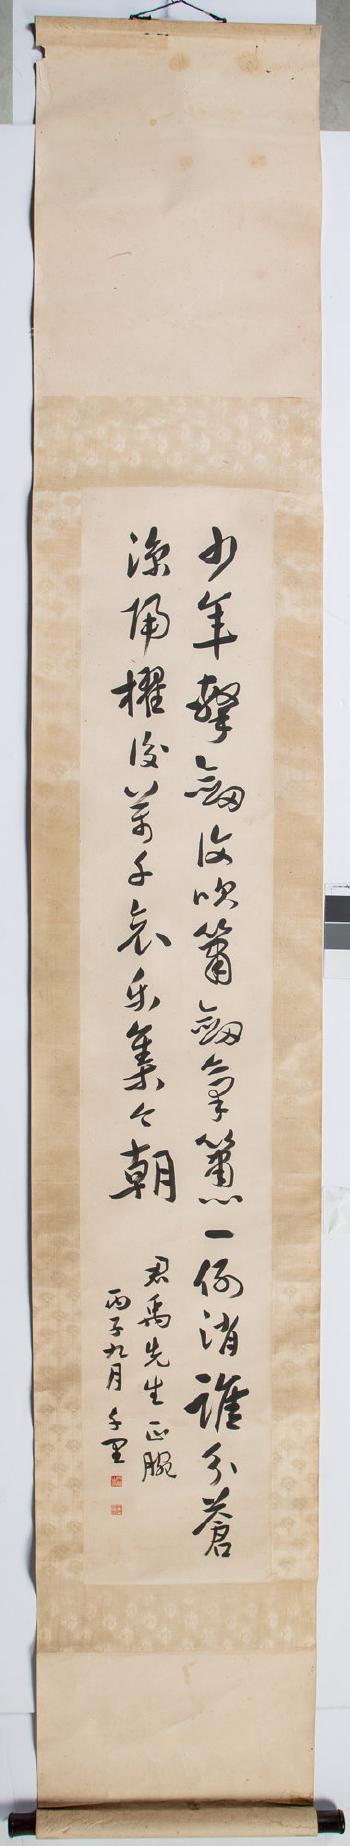 Calligraphy by 
																			 Yang Qianli